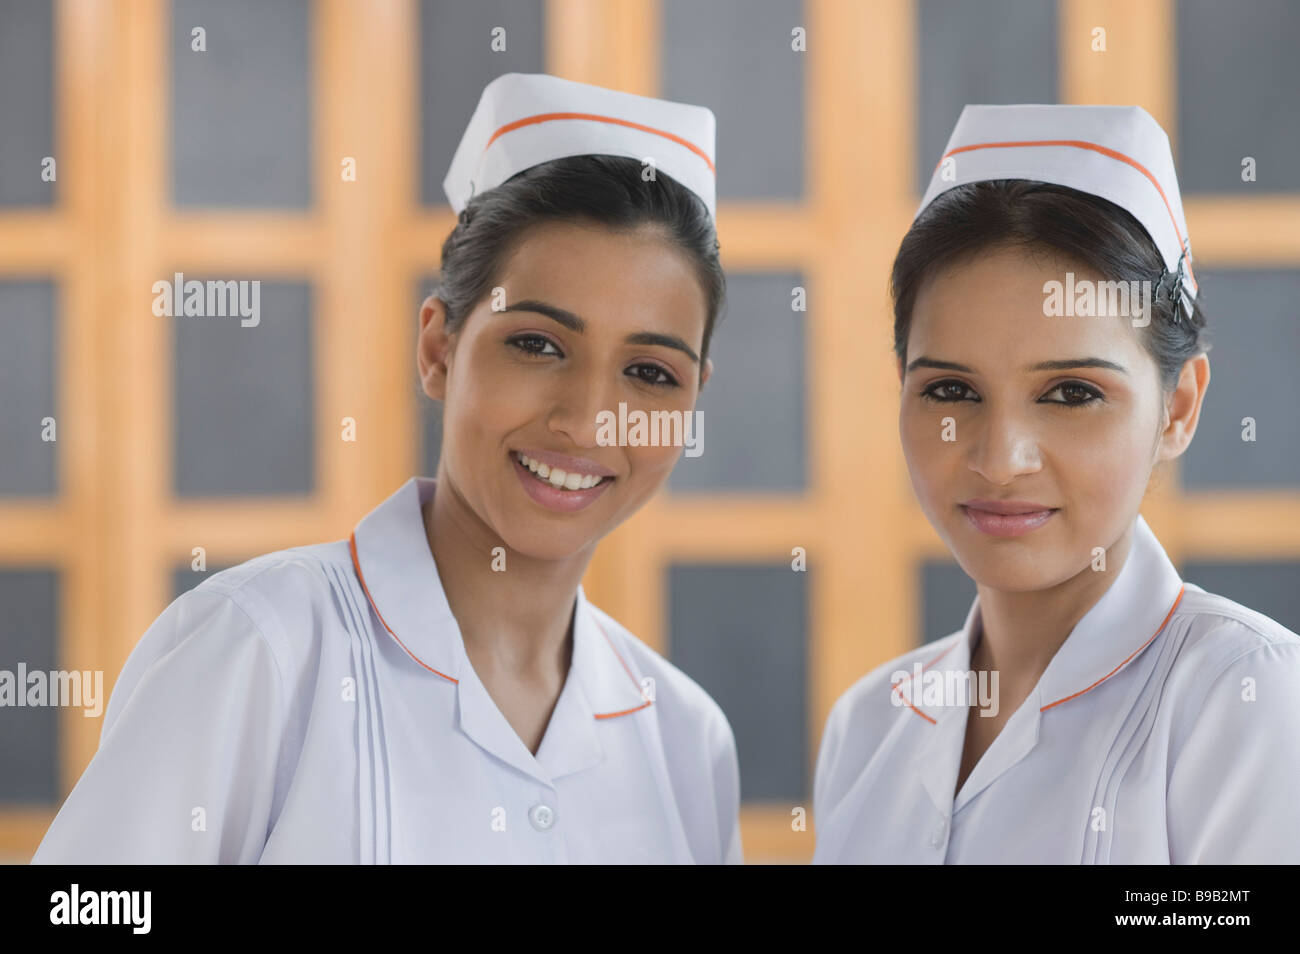 Portrait of two female nurses smiling Stock Photo